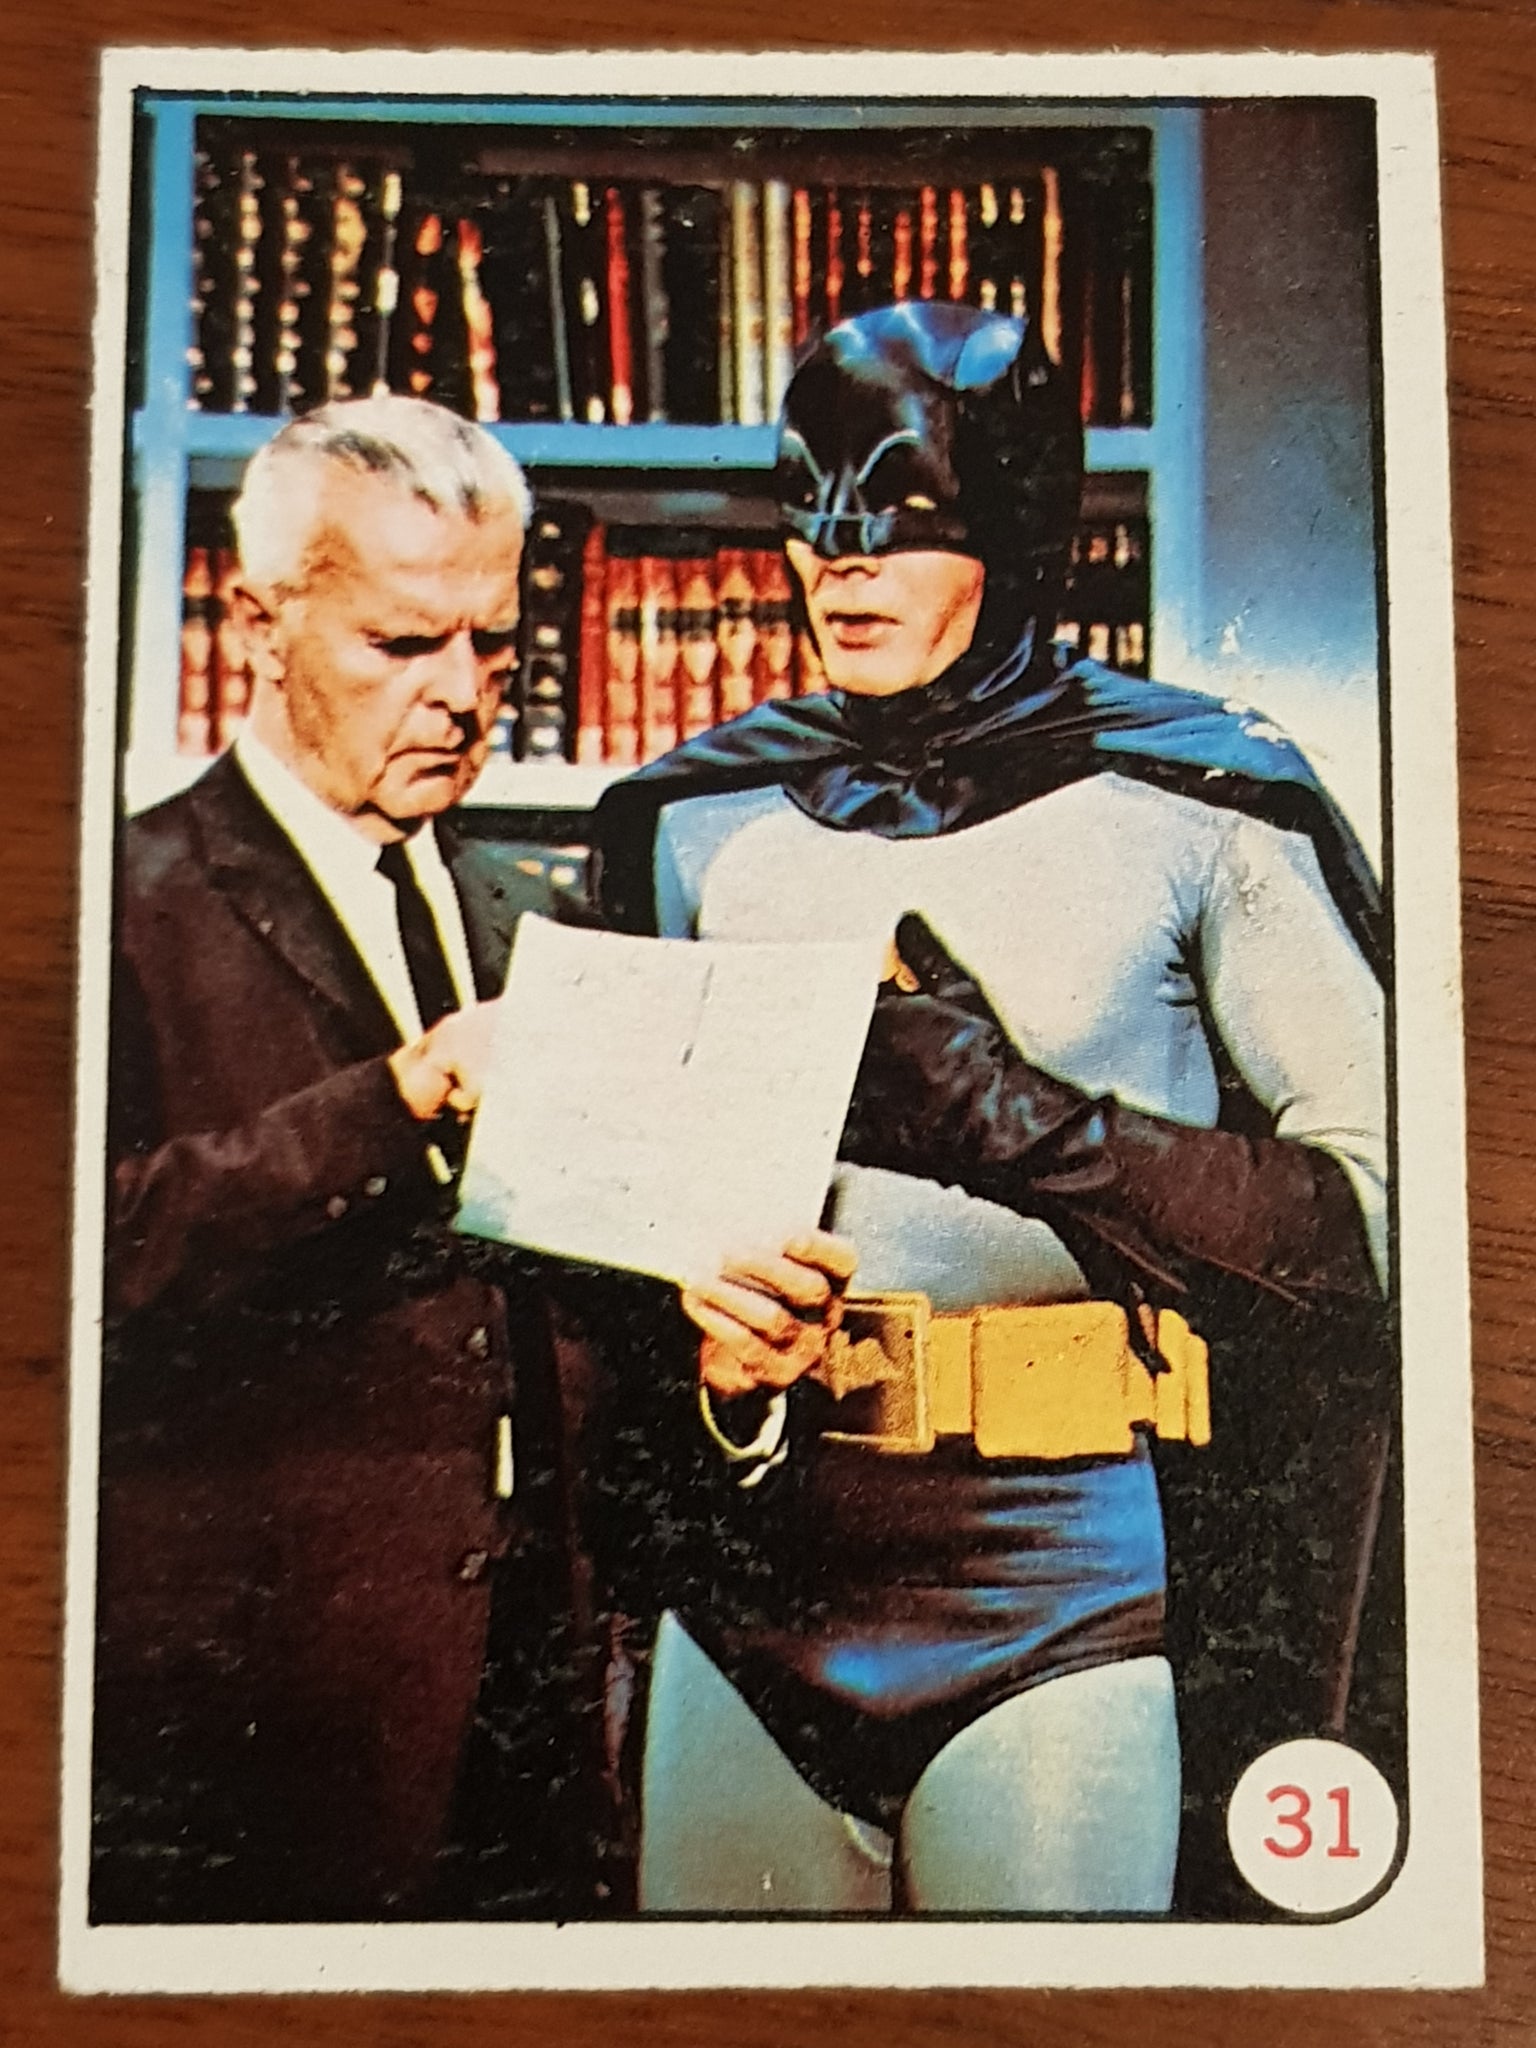 1966 Batman Trading Card #31 (England version) – Rotterdam Comics